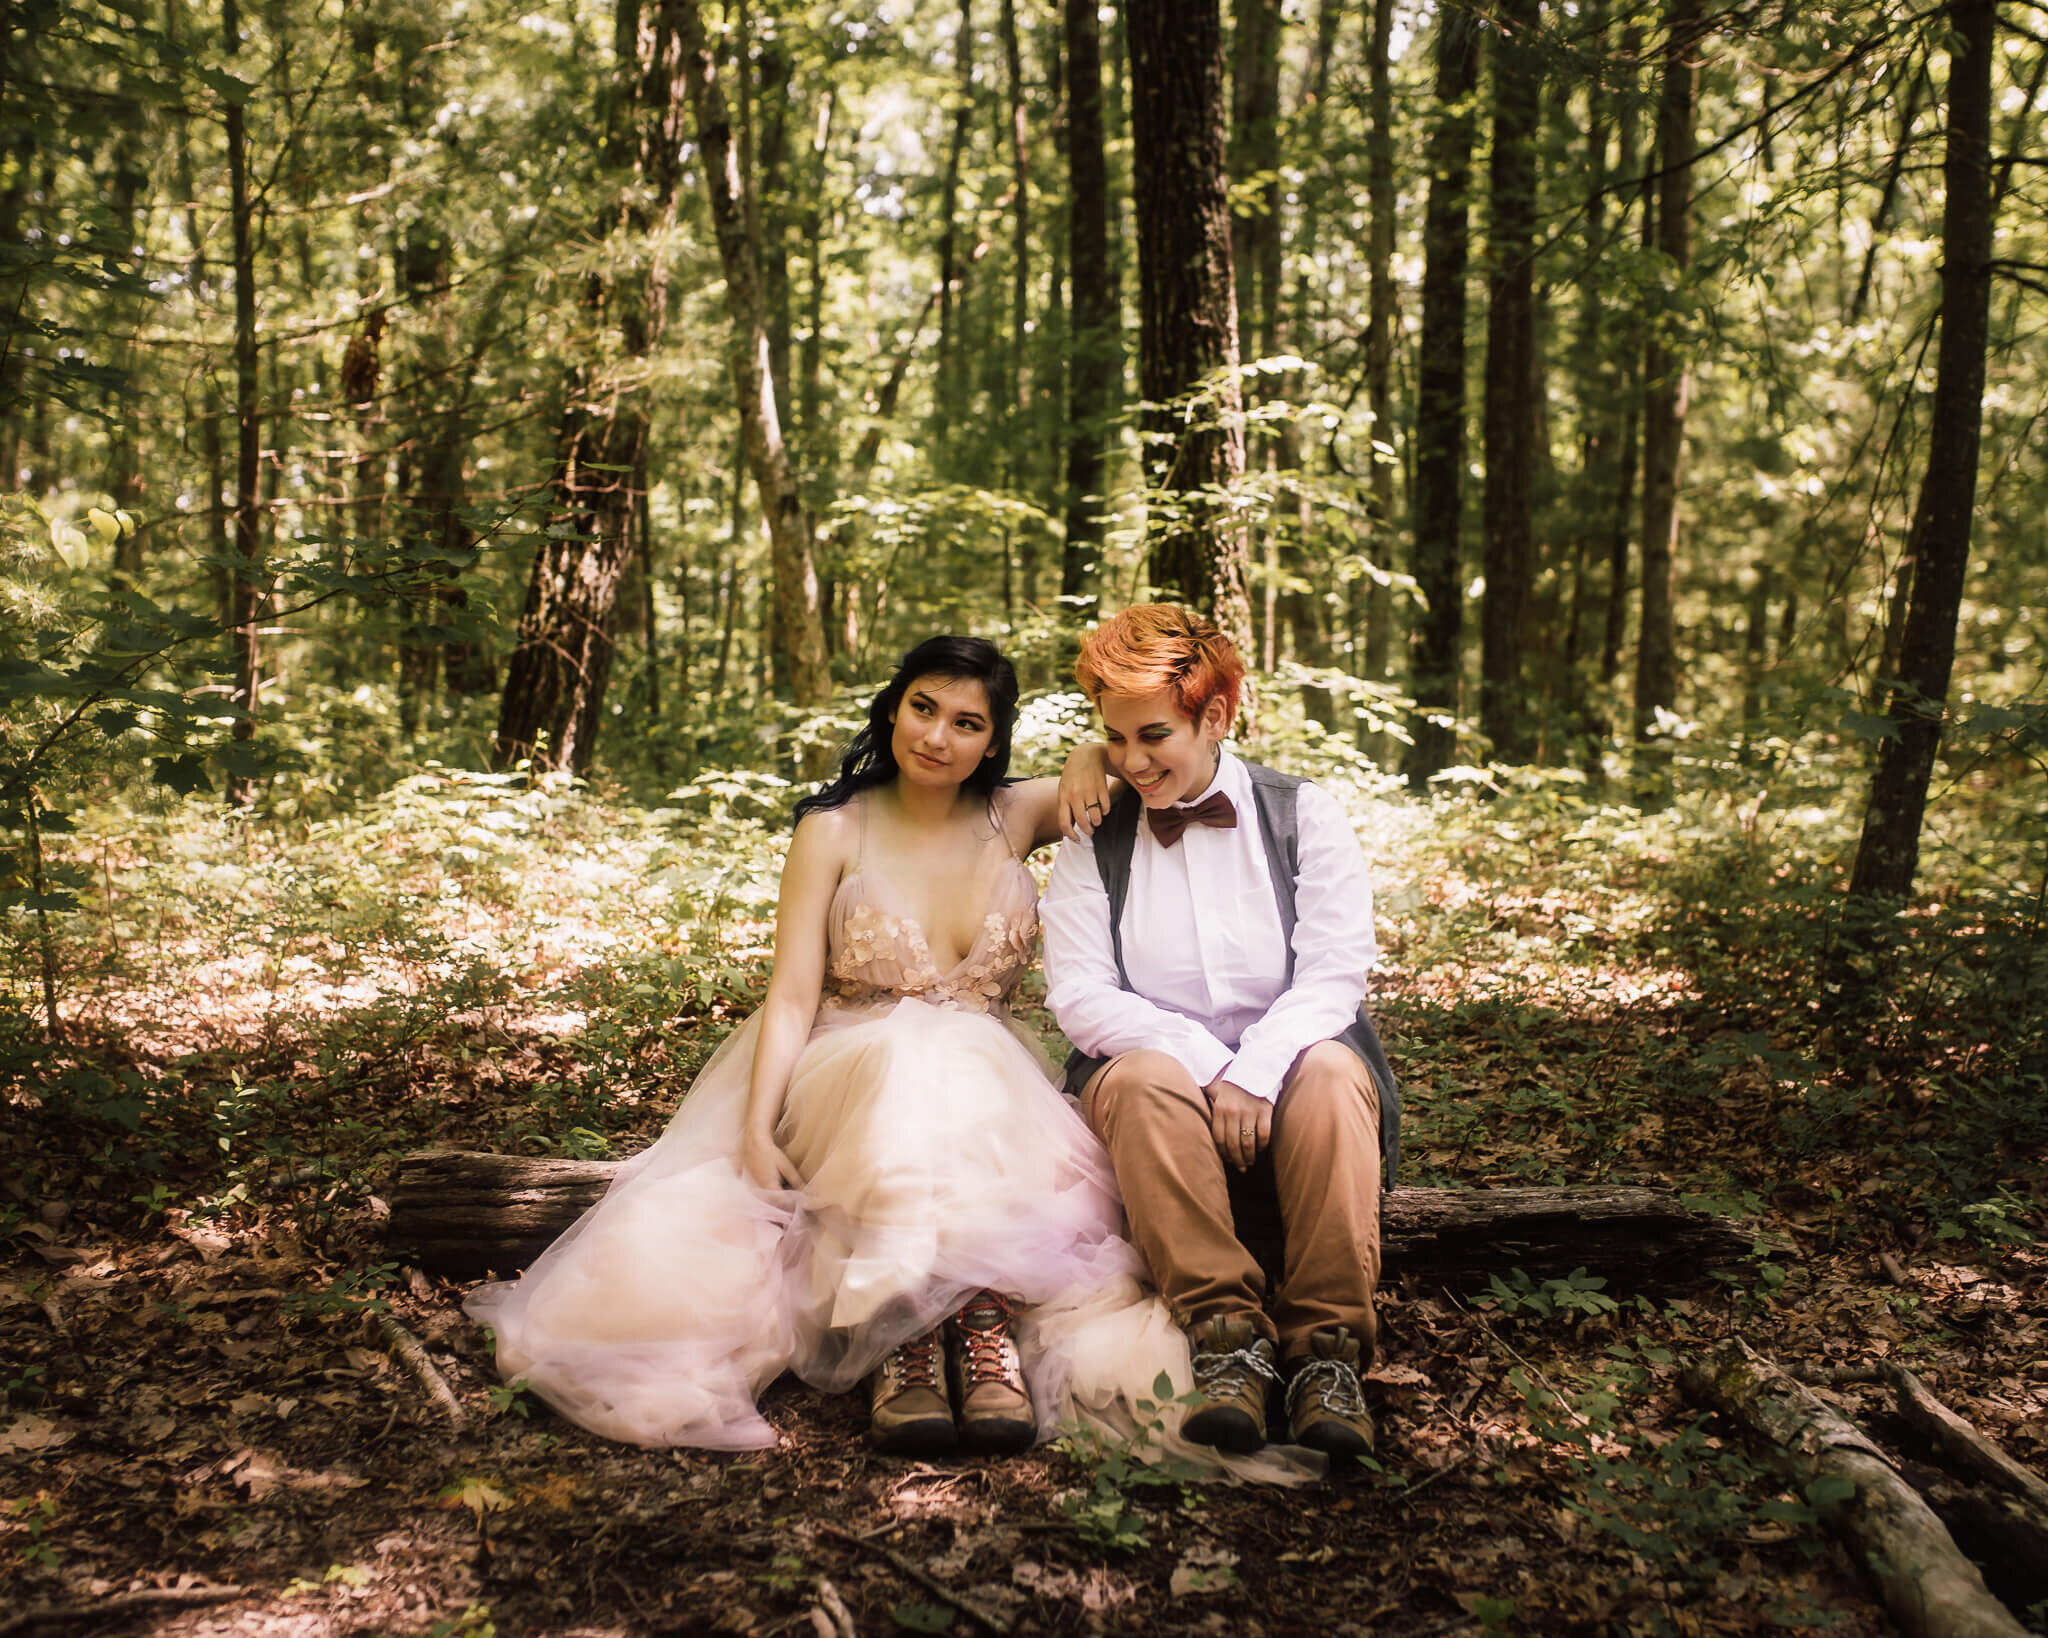 married-in-the-woods-elopement.jpg